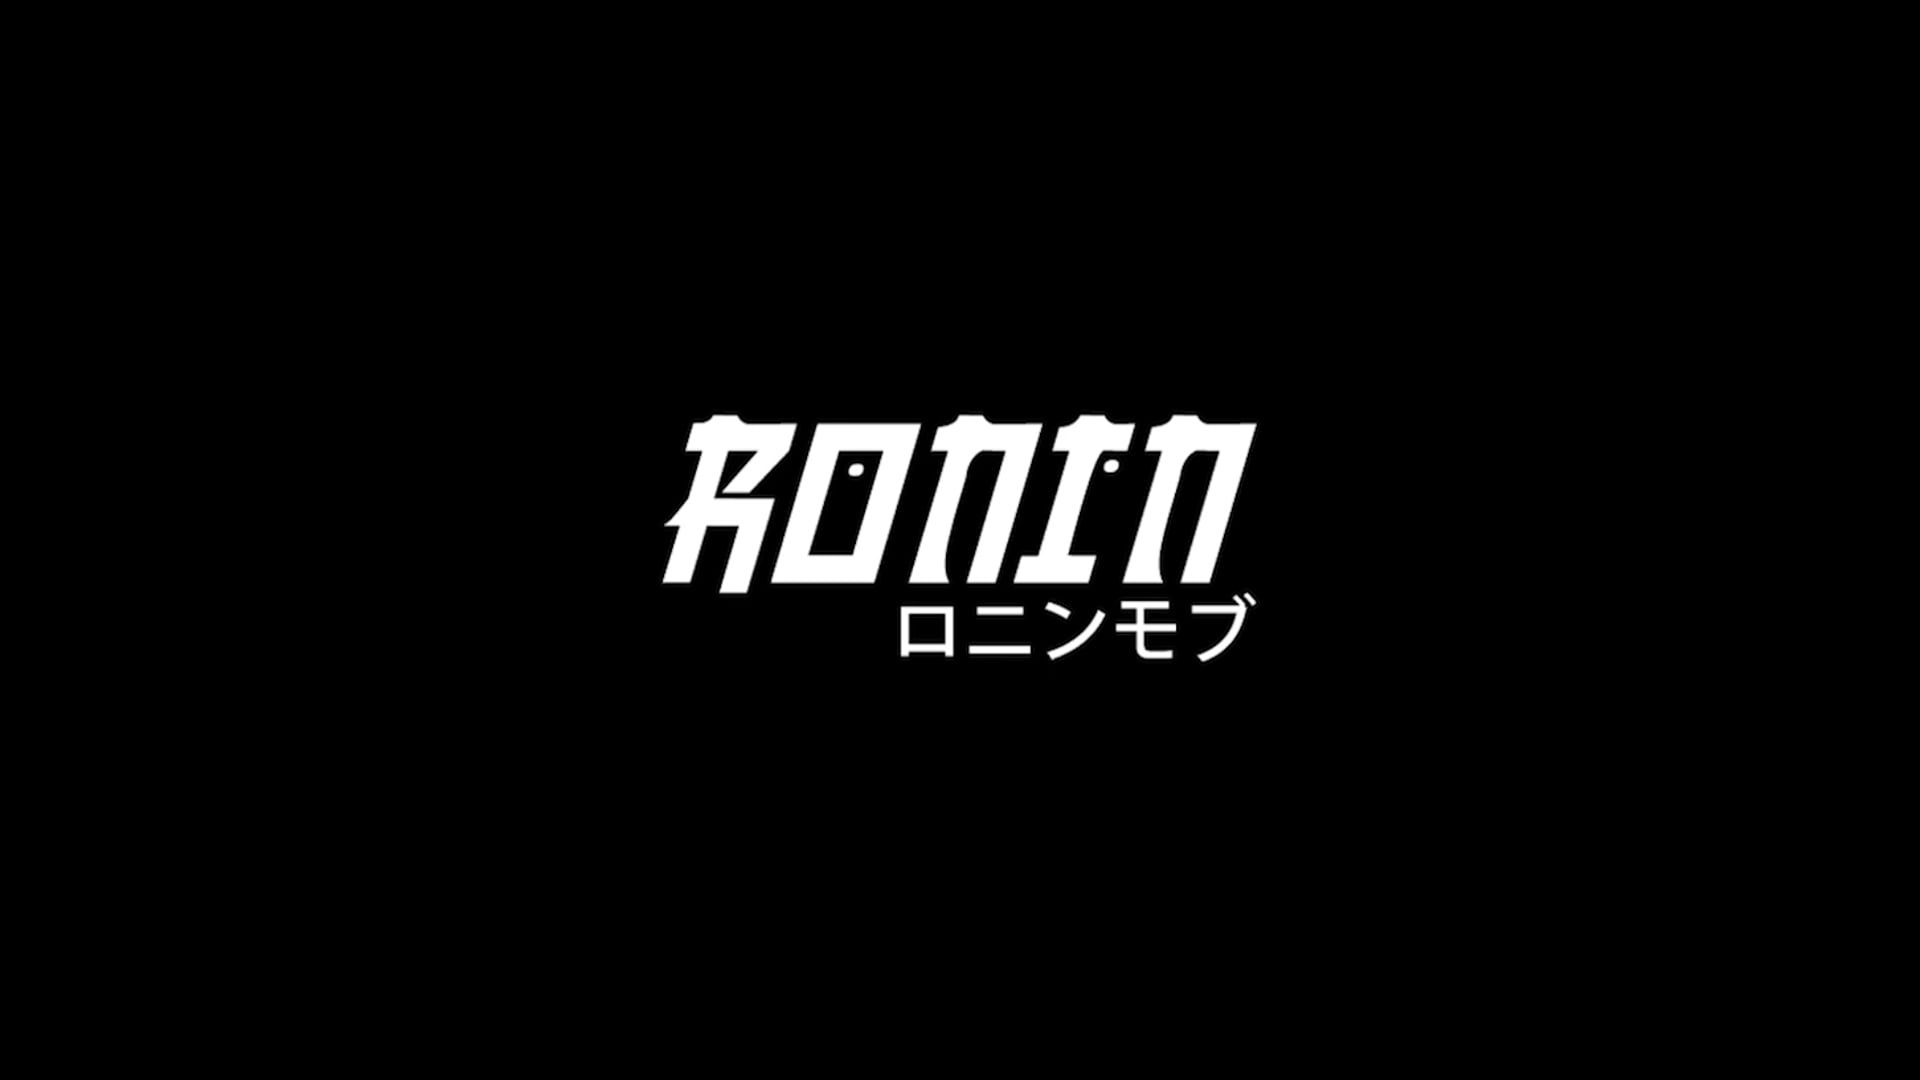 Ronin 2.0